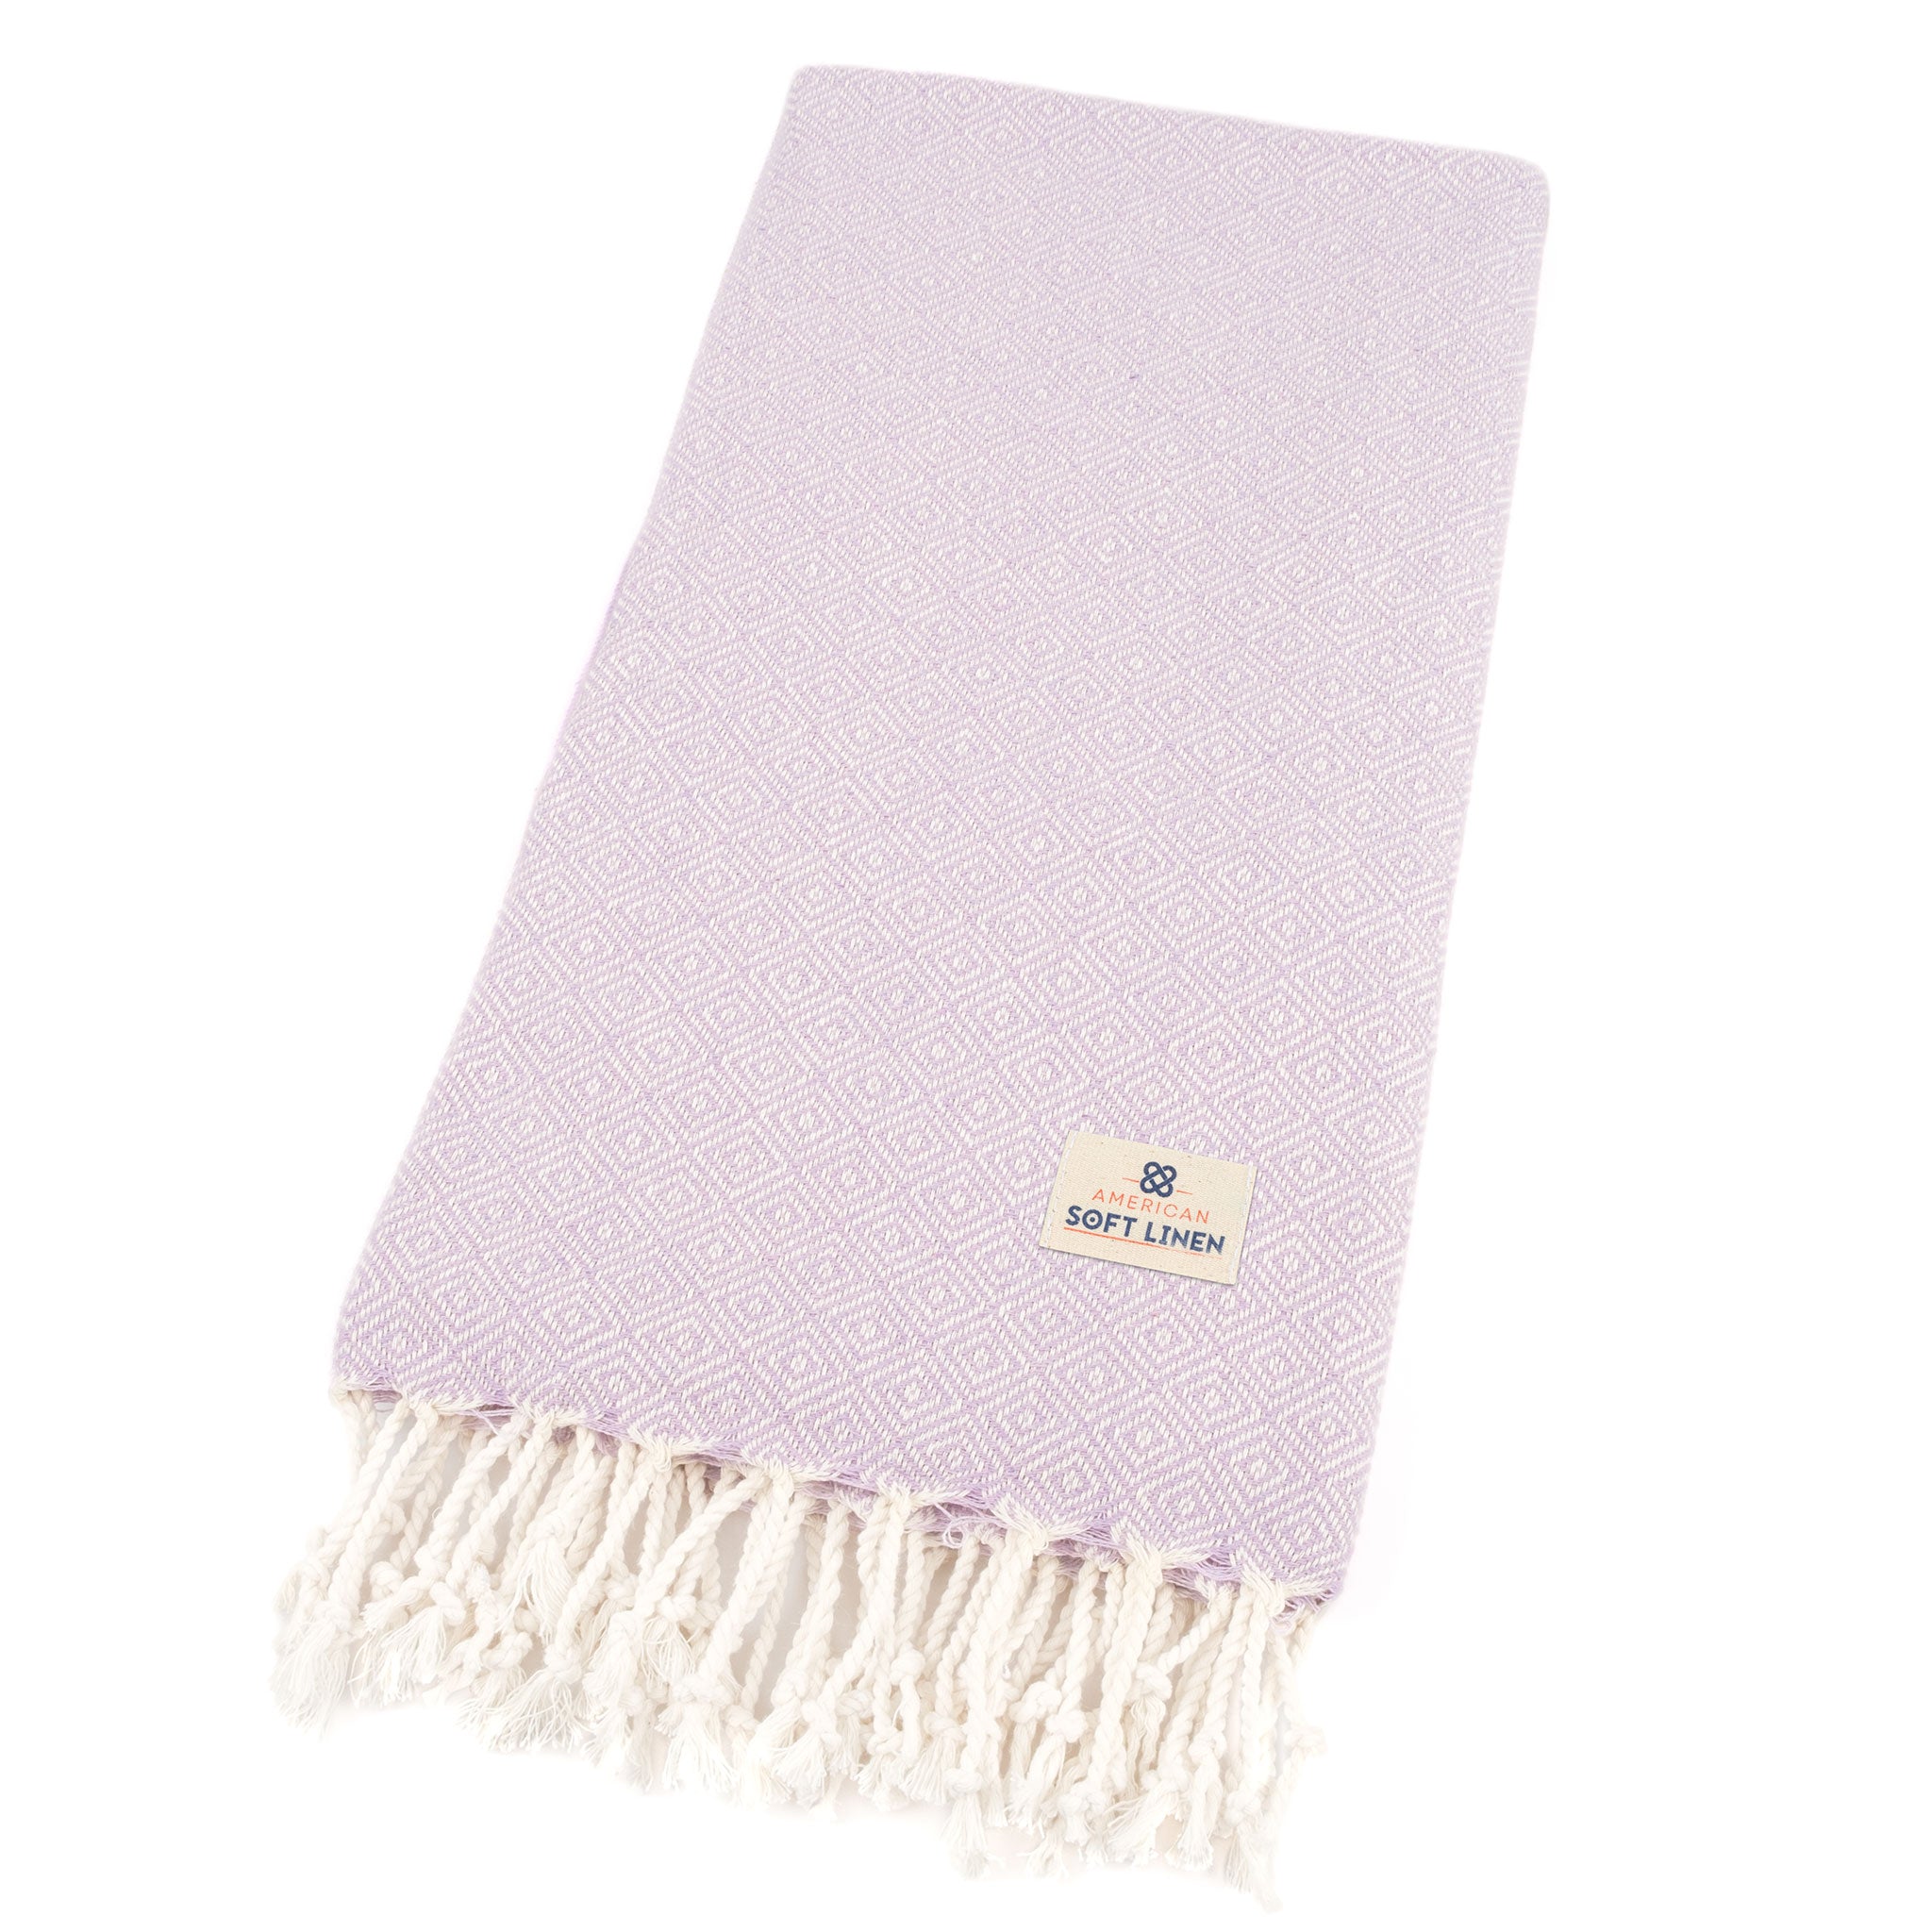 American Soft Linen - 100% Cotton Turkish Peshtemal Towels 40x70 Inches - Lilac - 5